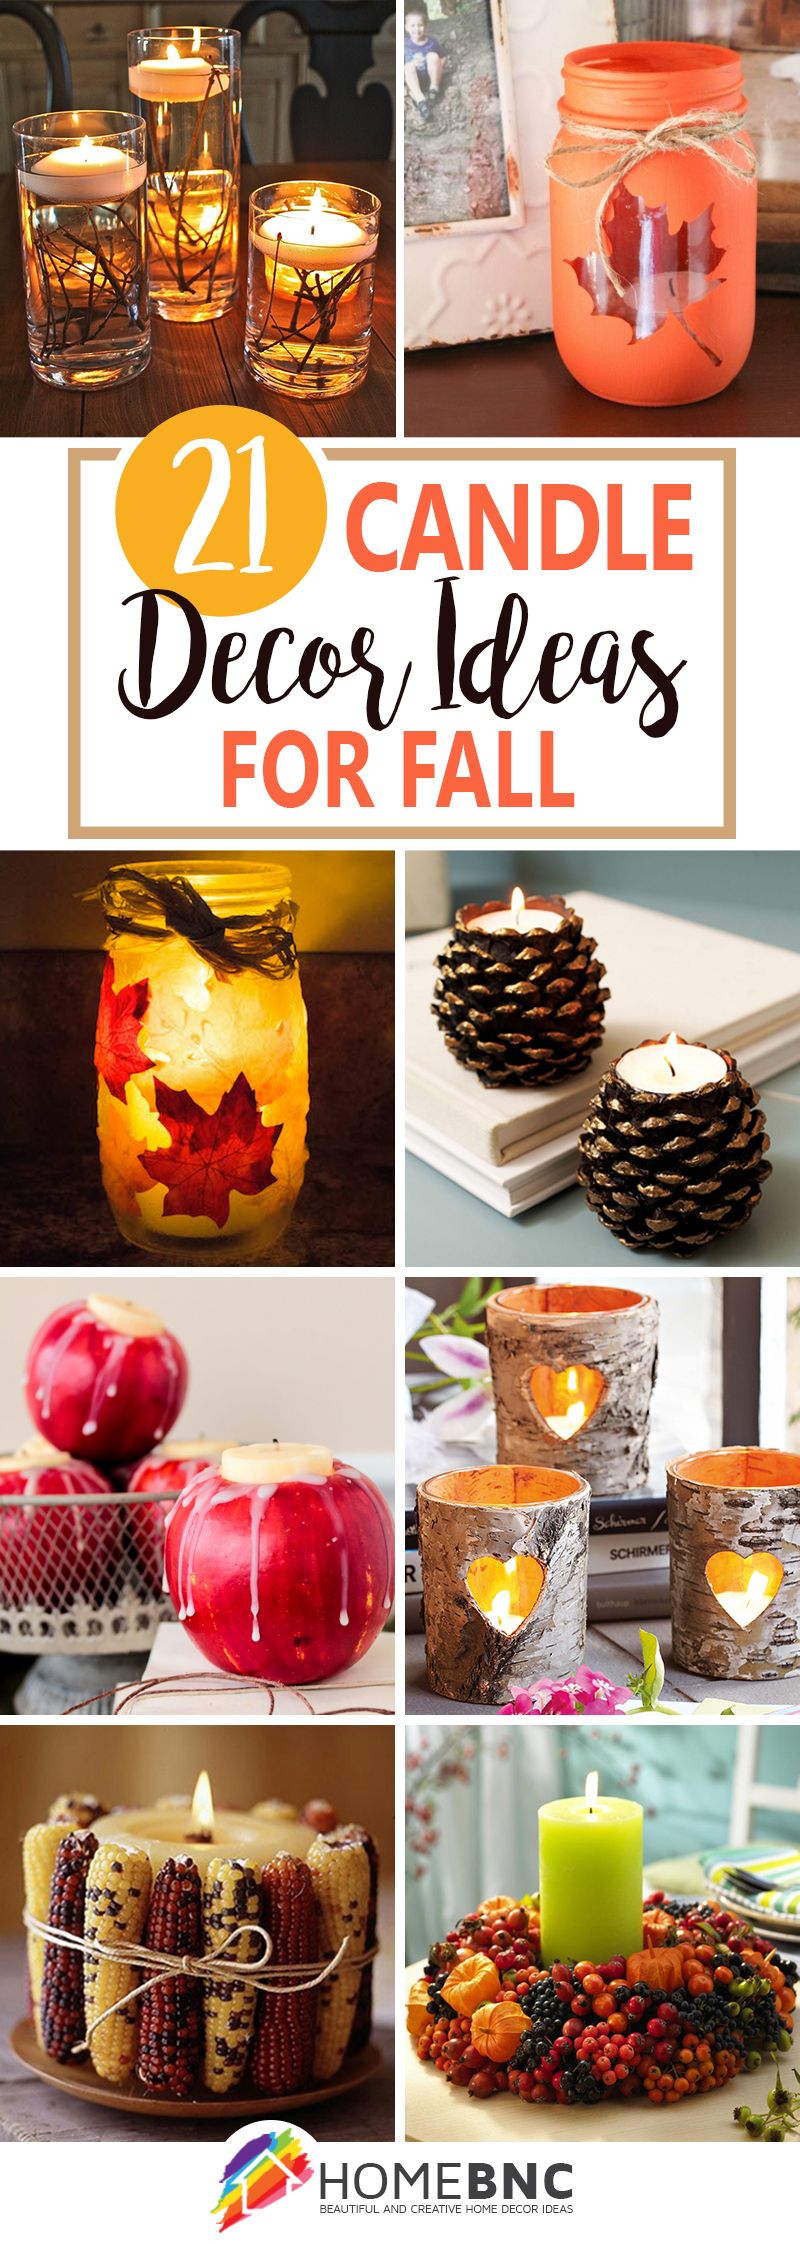 fall-candle-decoration-ideas-pinterest-share-homebnc-4